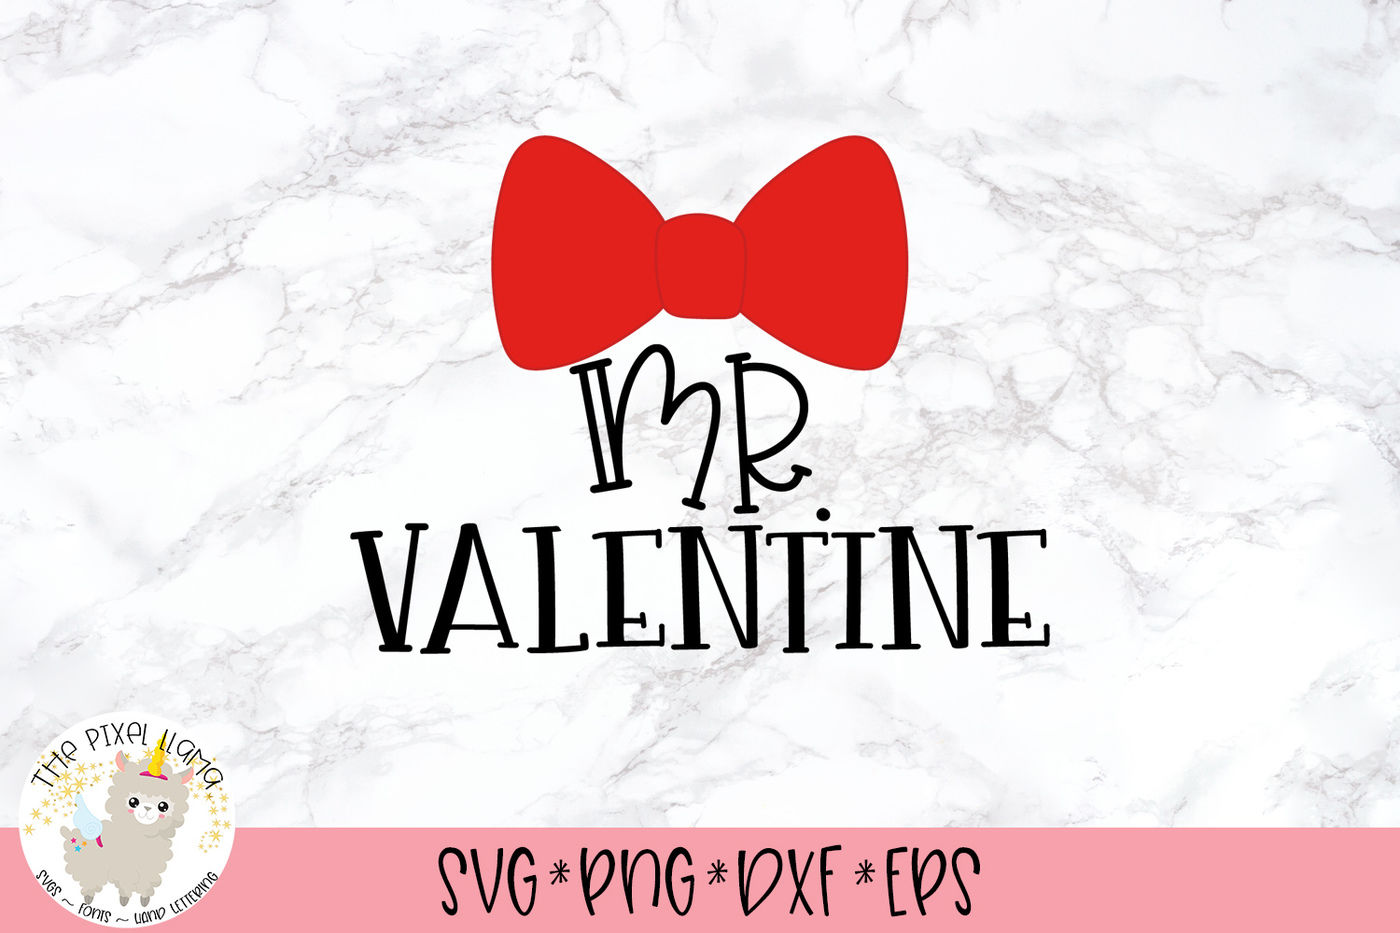 Mr Valentine SVG Cut File By The Pixel Llama | TheHungryJPEG.com